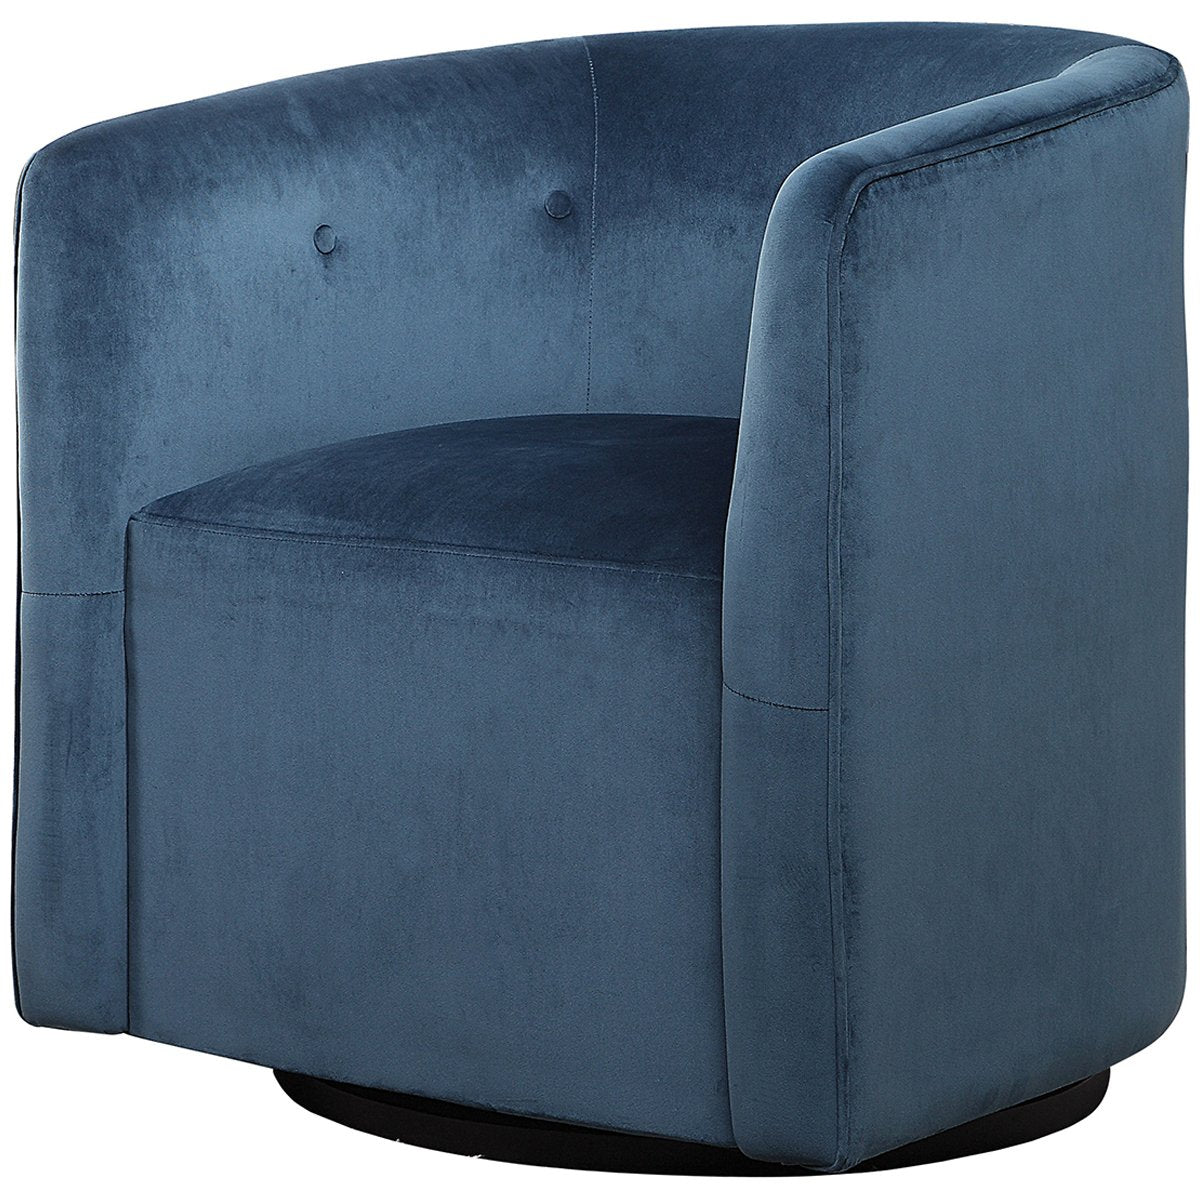 Uttermost Mallorie Blue Swivel Chair